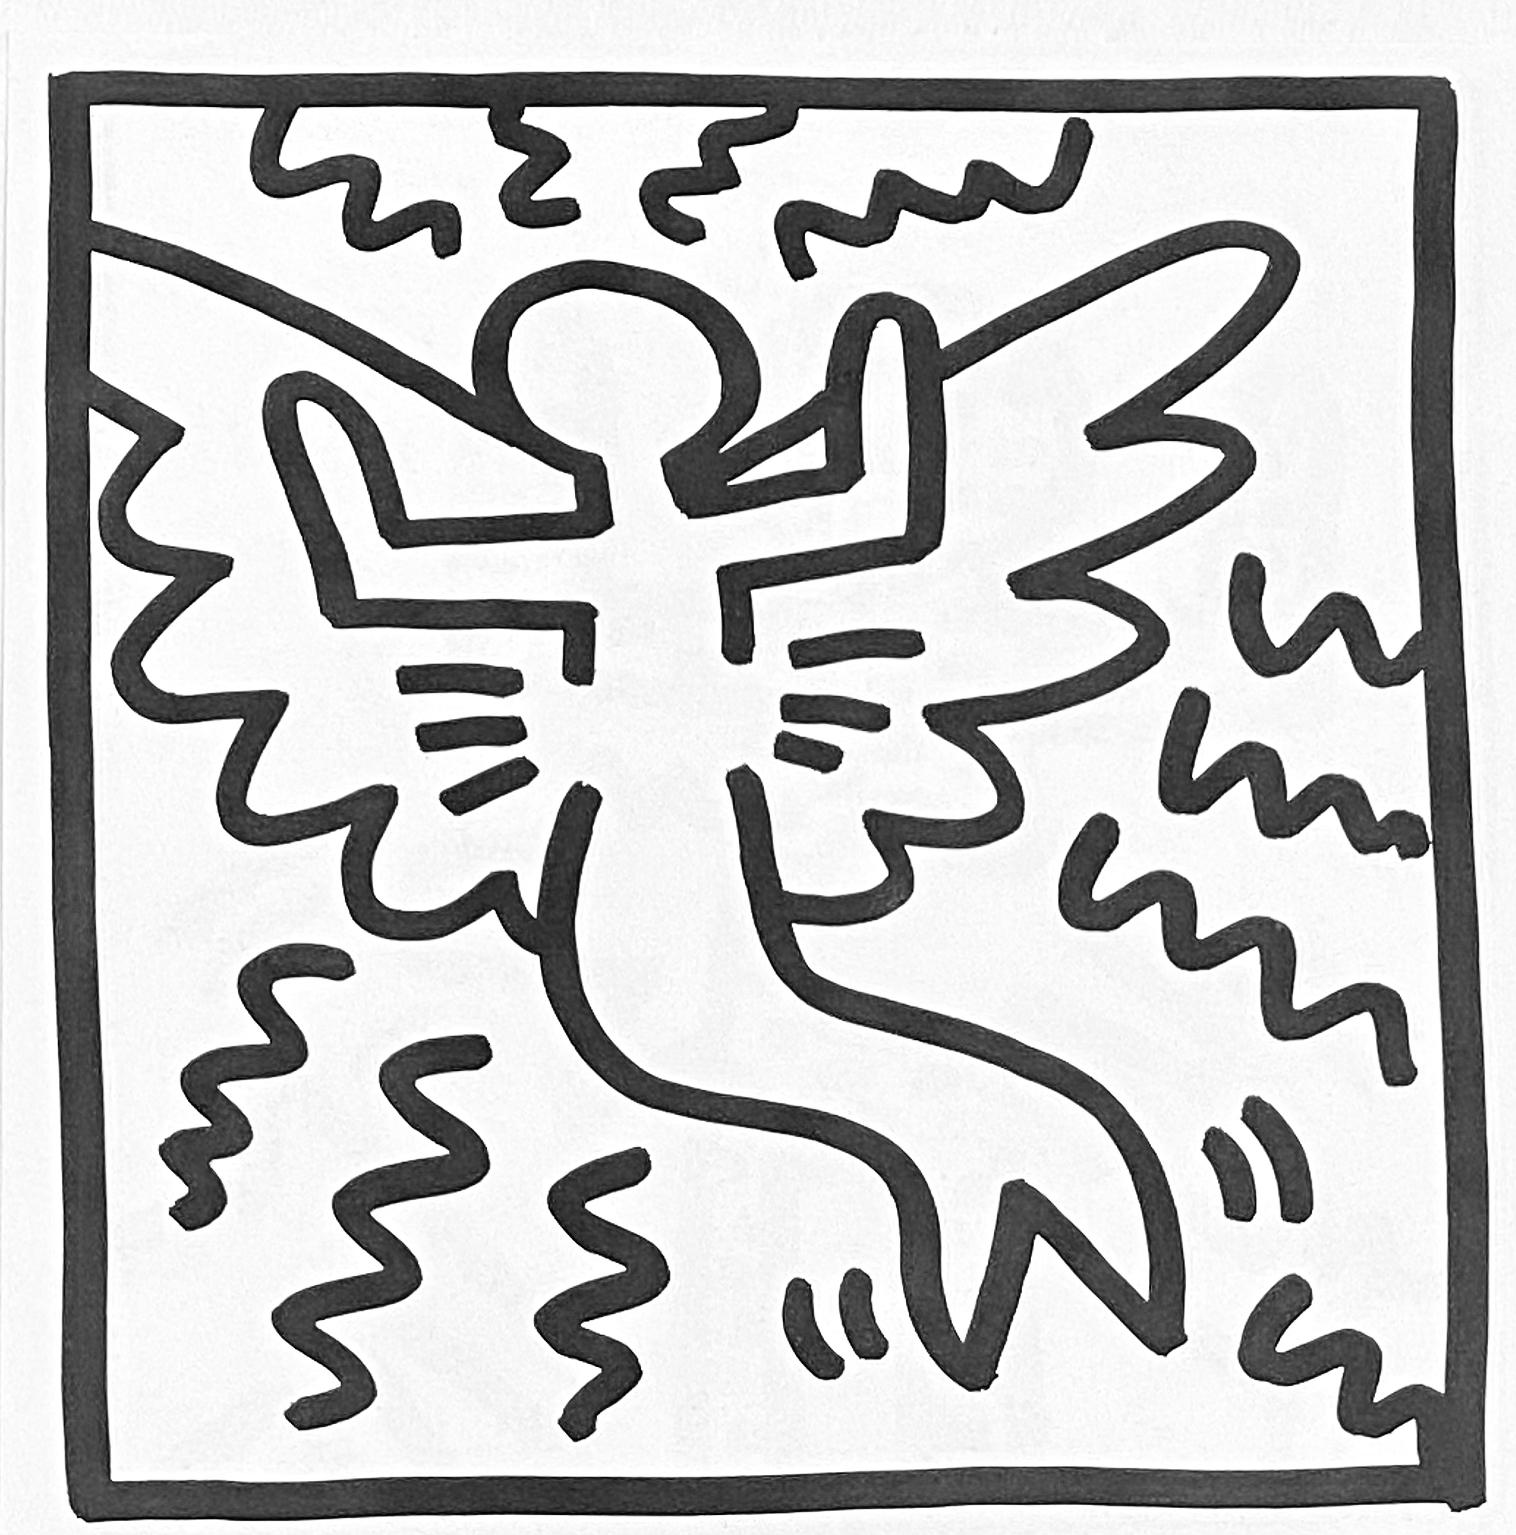 (after) Keith Haring Animal Print - Keith Haring (untitled) angel lithograph 1982 (Keith Haring prints)